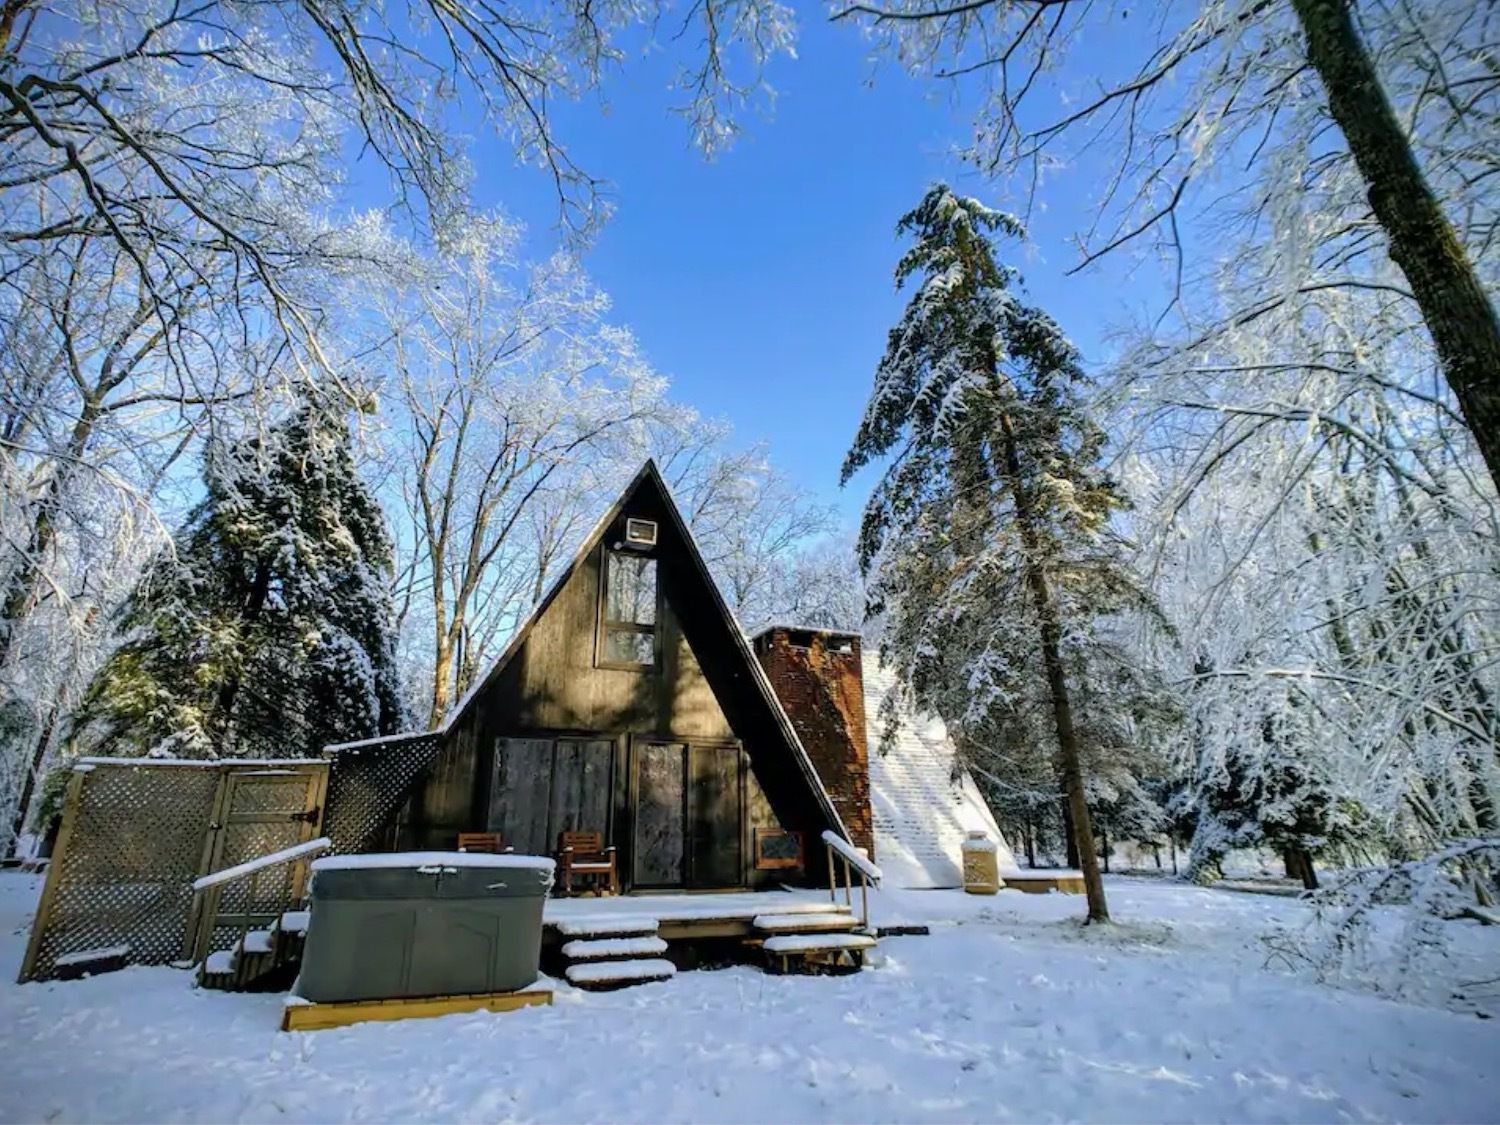 The Alpine A-frame cabin rental in Pennsylvania